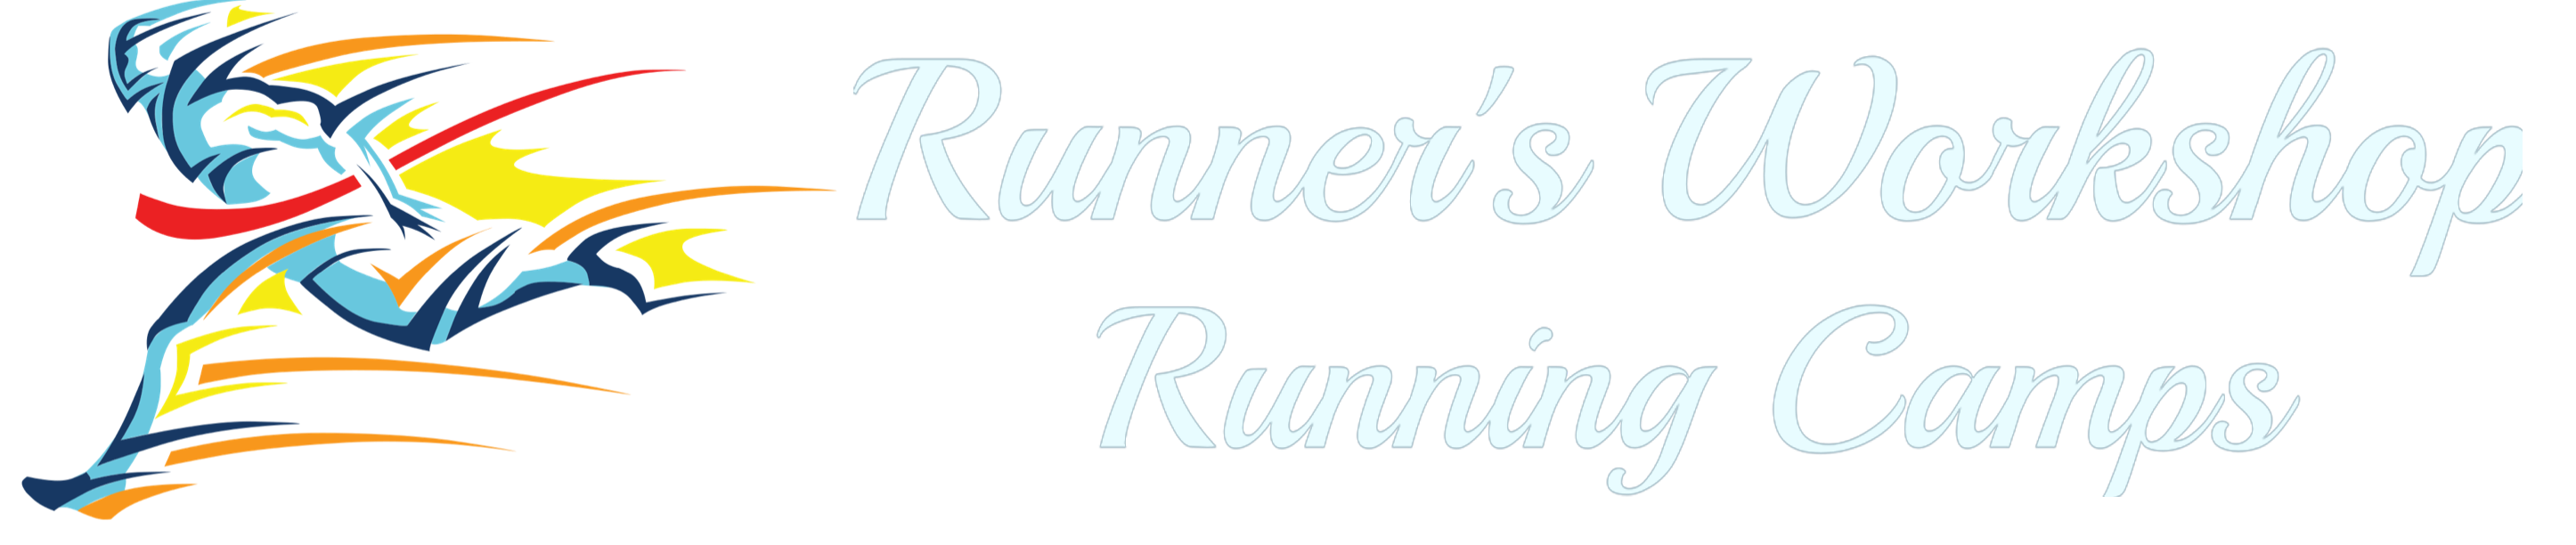 (c) Runnersworkshop.com